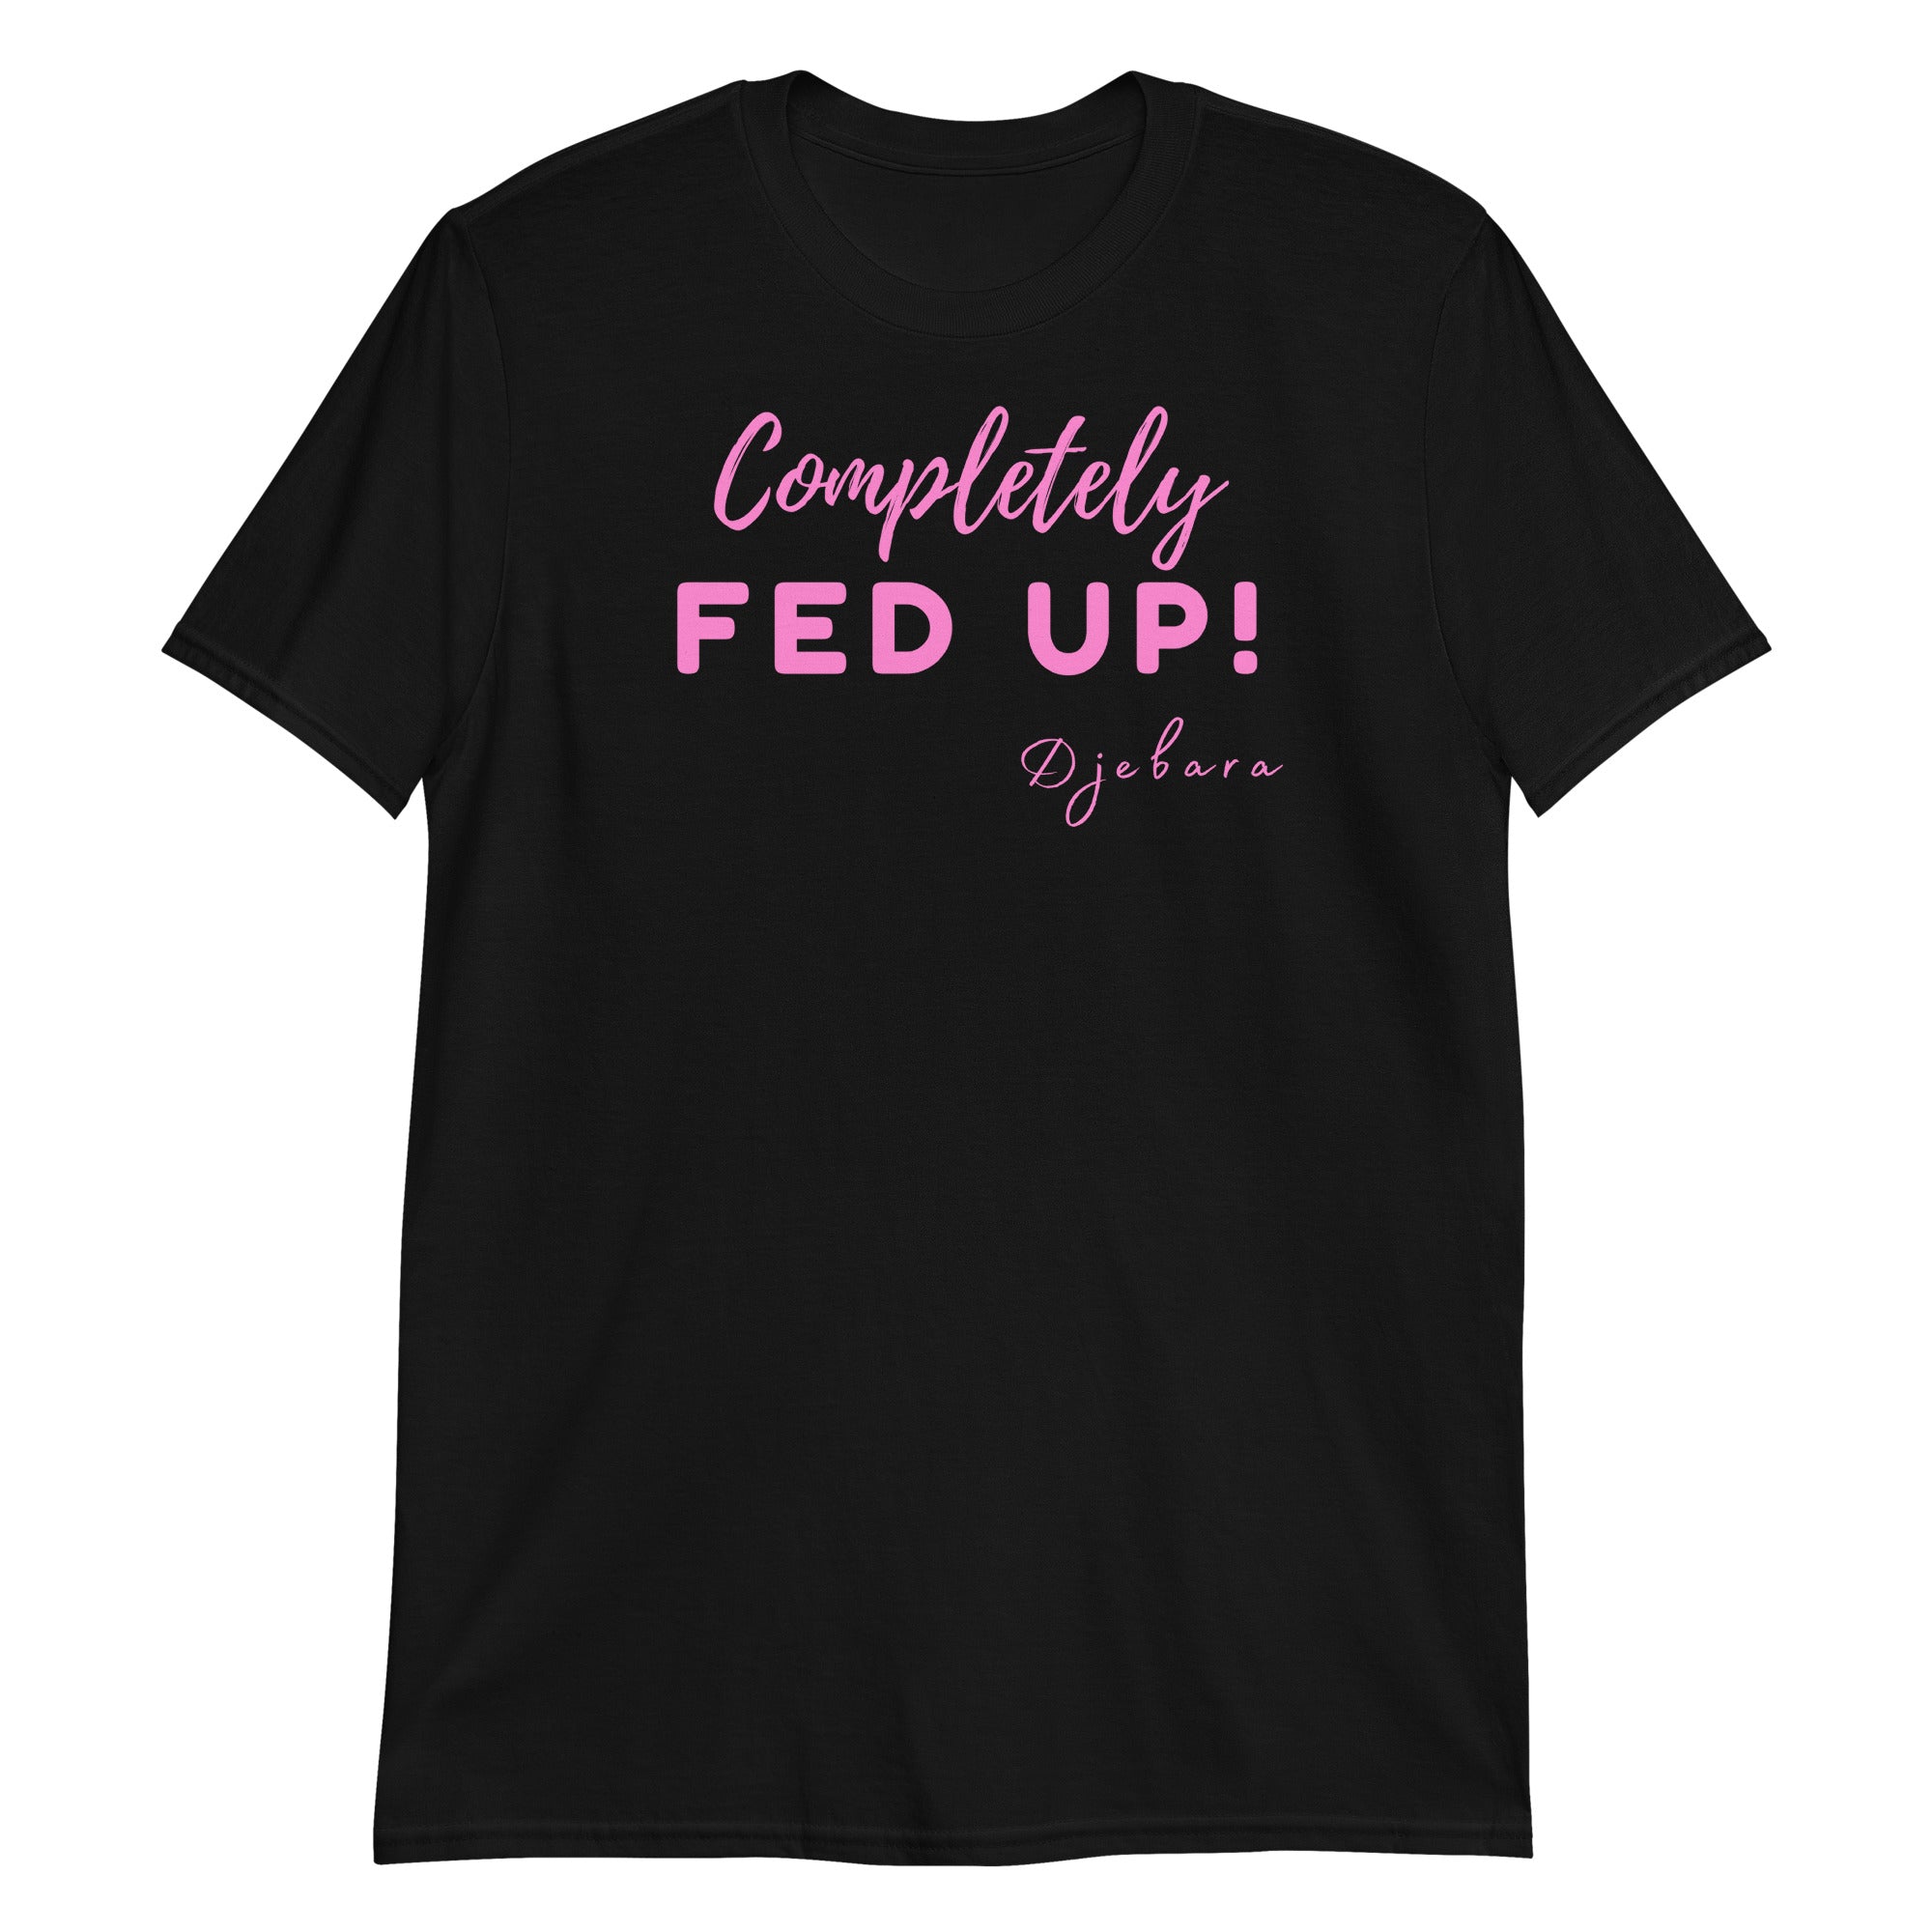 Completely FED UP! Short-Sleeve Gildan Unisex T-Shirt (Pink) S-3XL